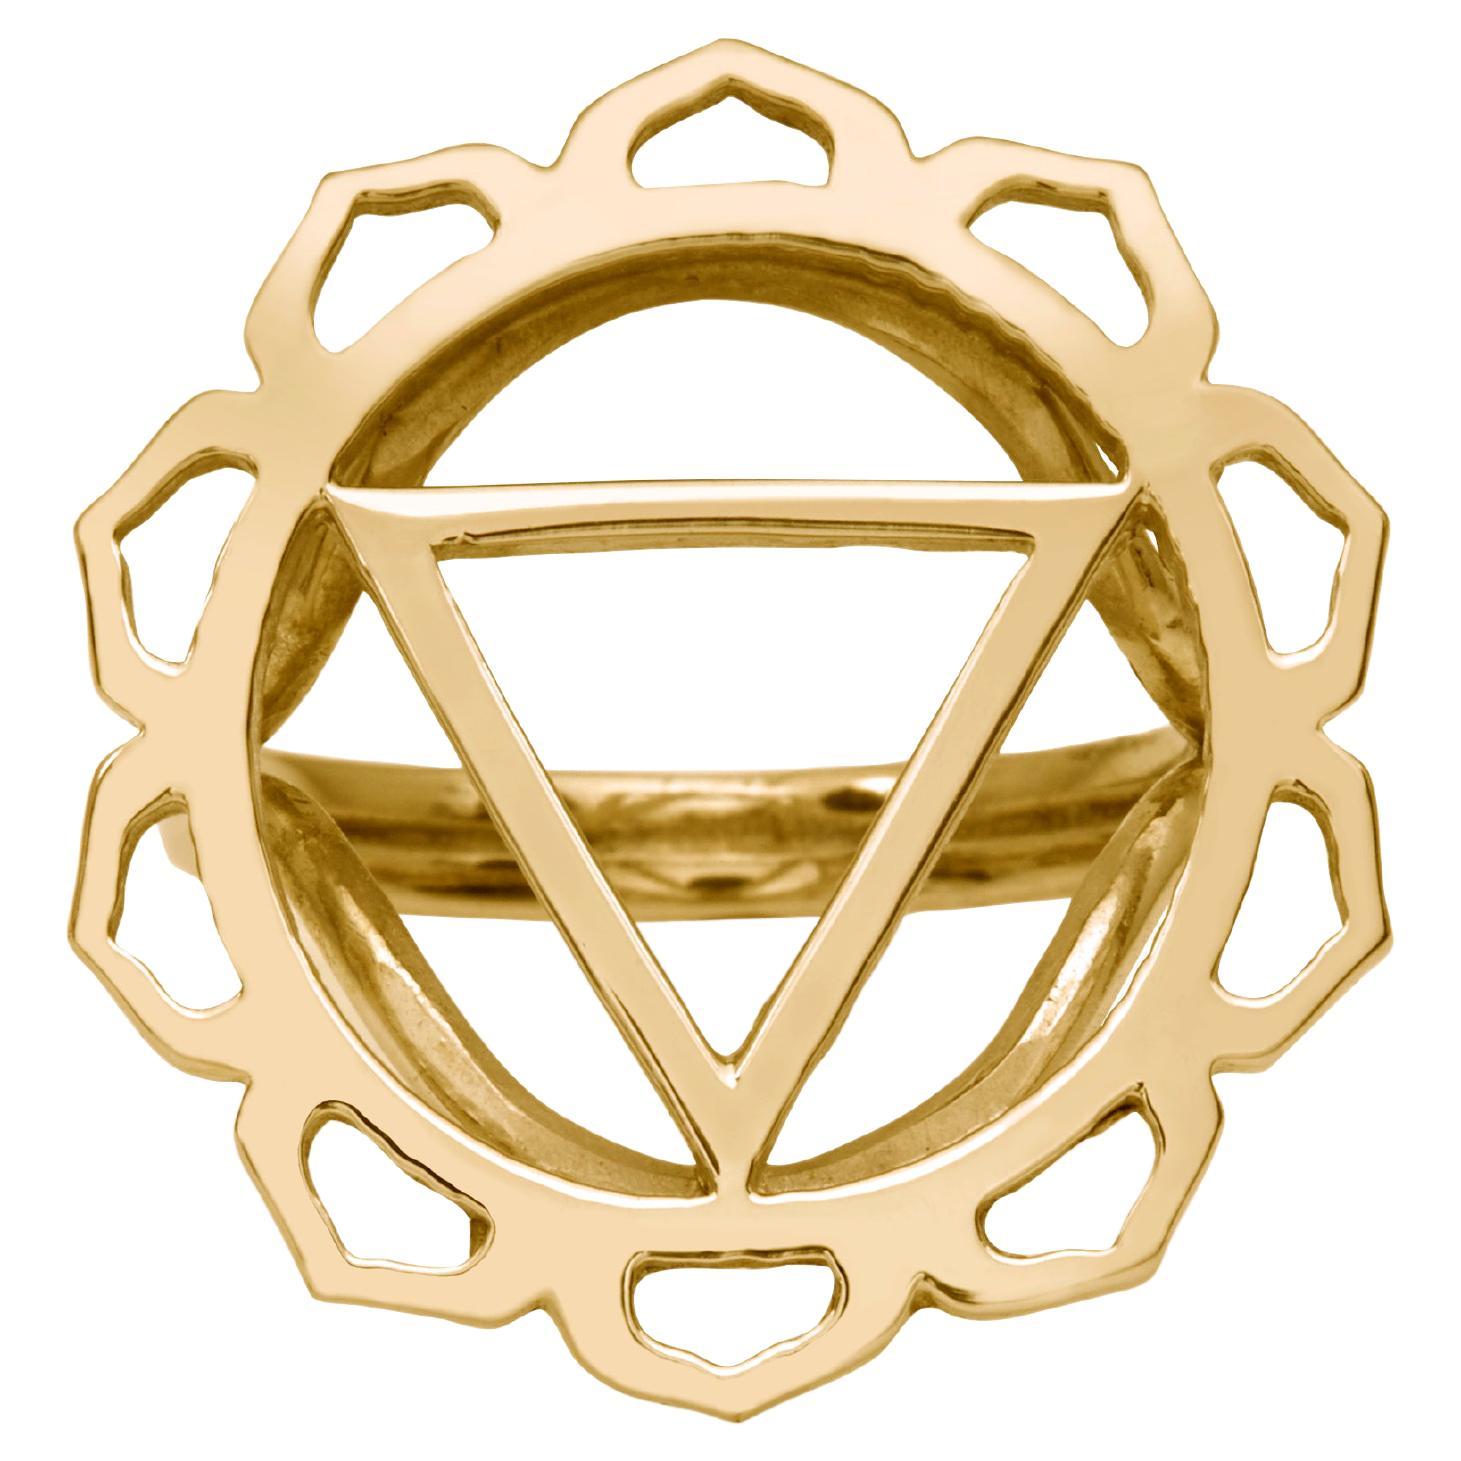 Handgefertigter Yoga-Ring mit Manipura Solar Plexus Chakra in 14Kt Gold